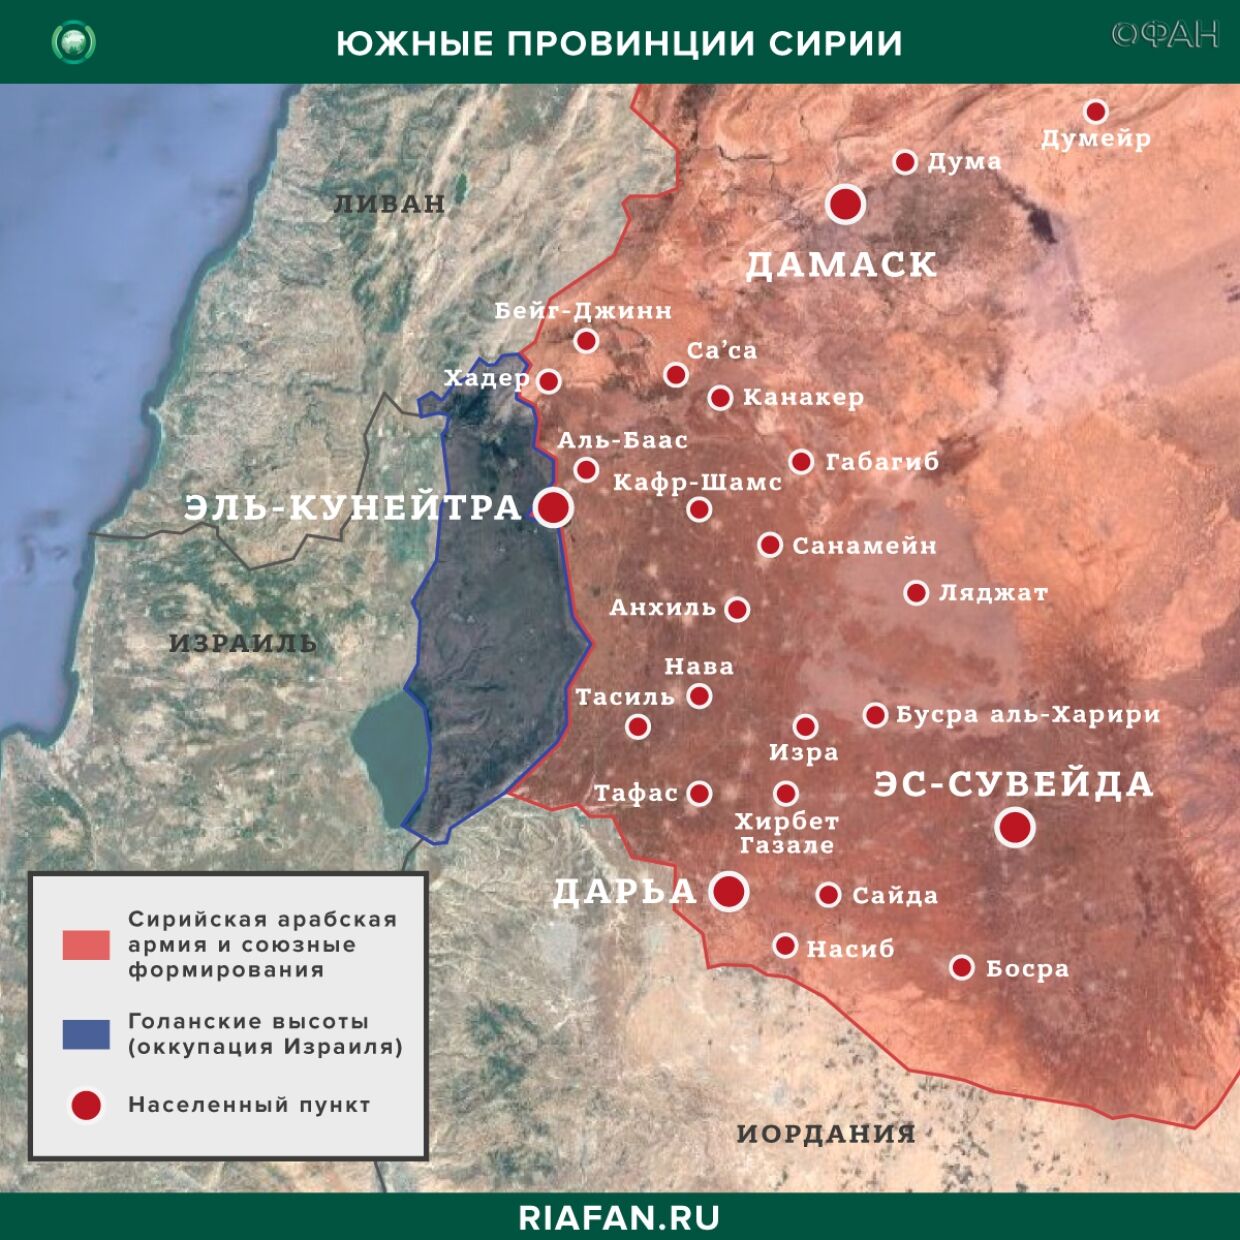 Nouvelles de Syrie 29 Avril 22.30: турецкие саперы обезвредили СВУ на севере САР, ИГ* заявило об убийстве солдата САА в Даръа